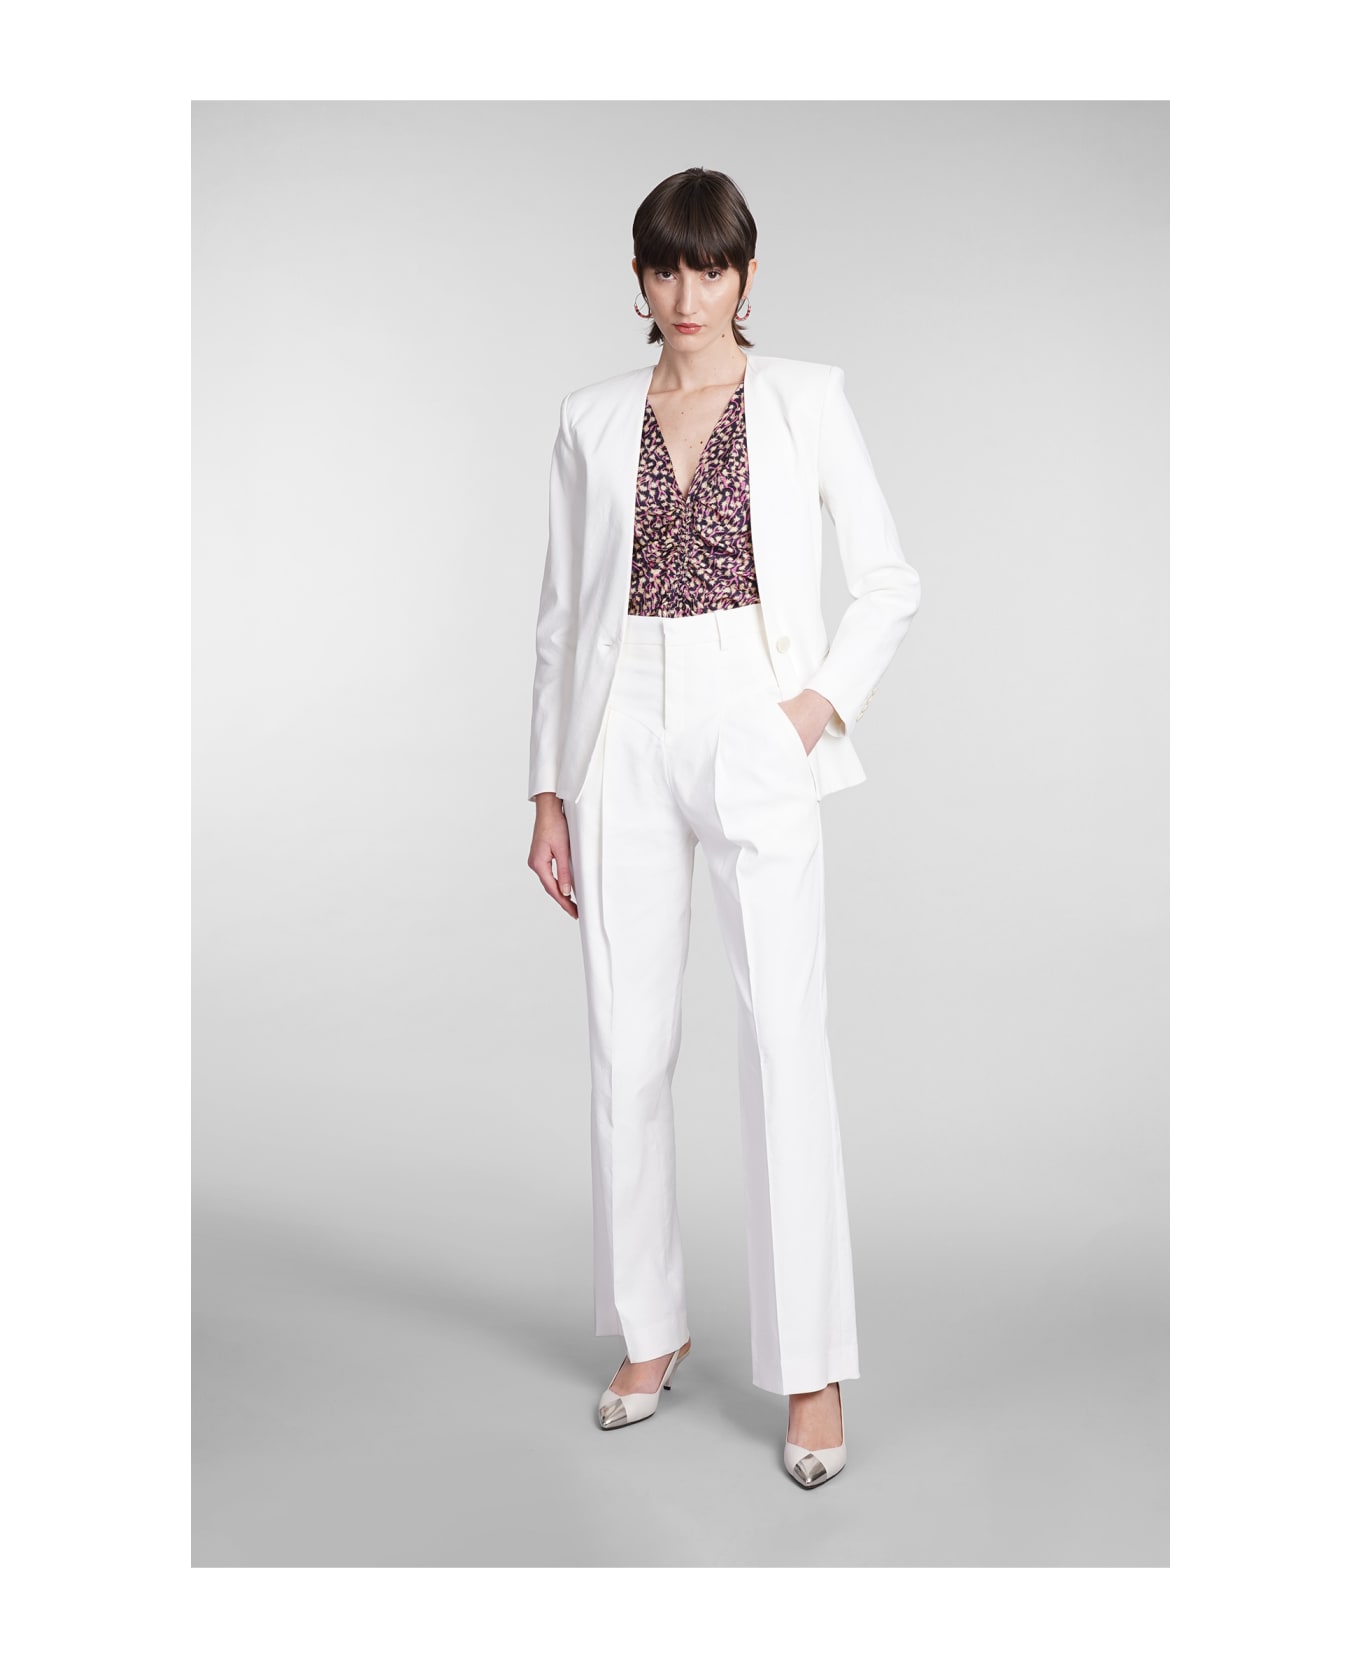 Isabel Marant Staya Pants In White Cotton - White